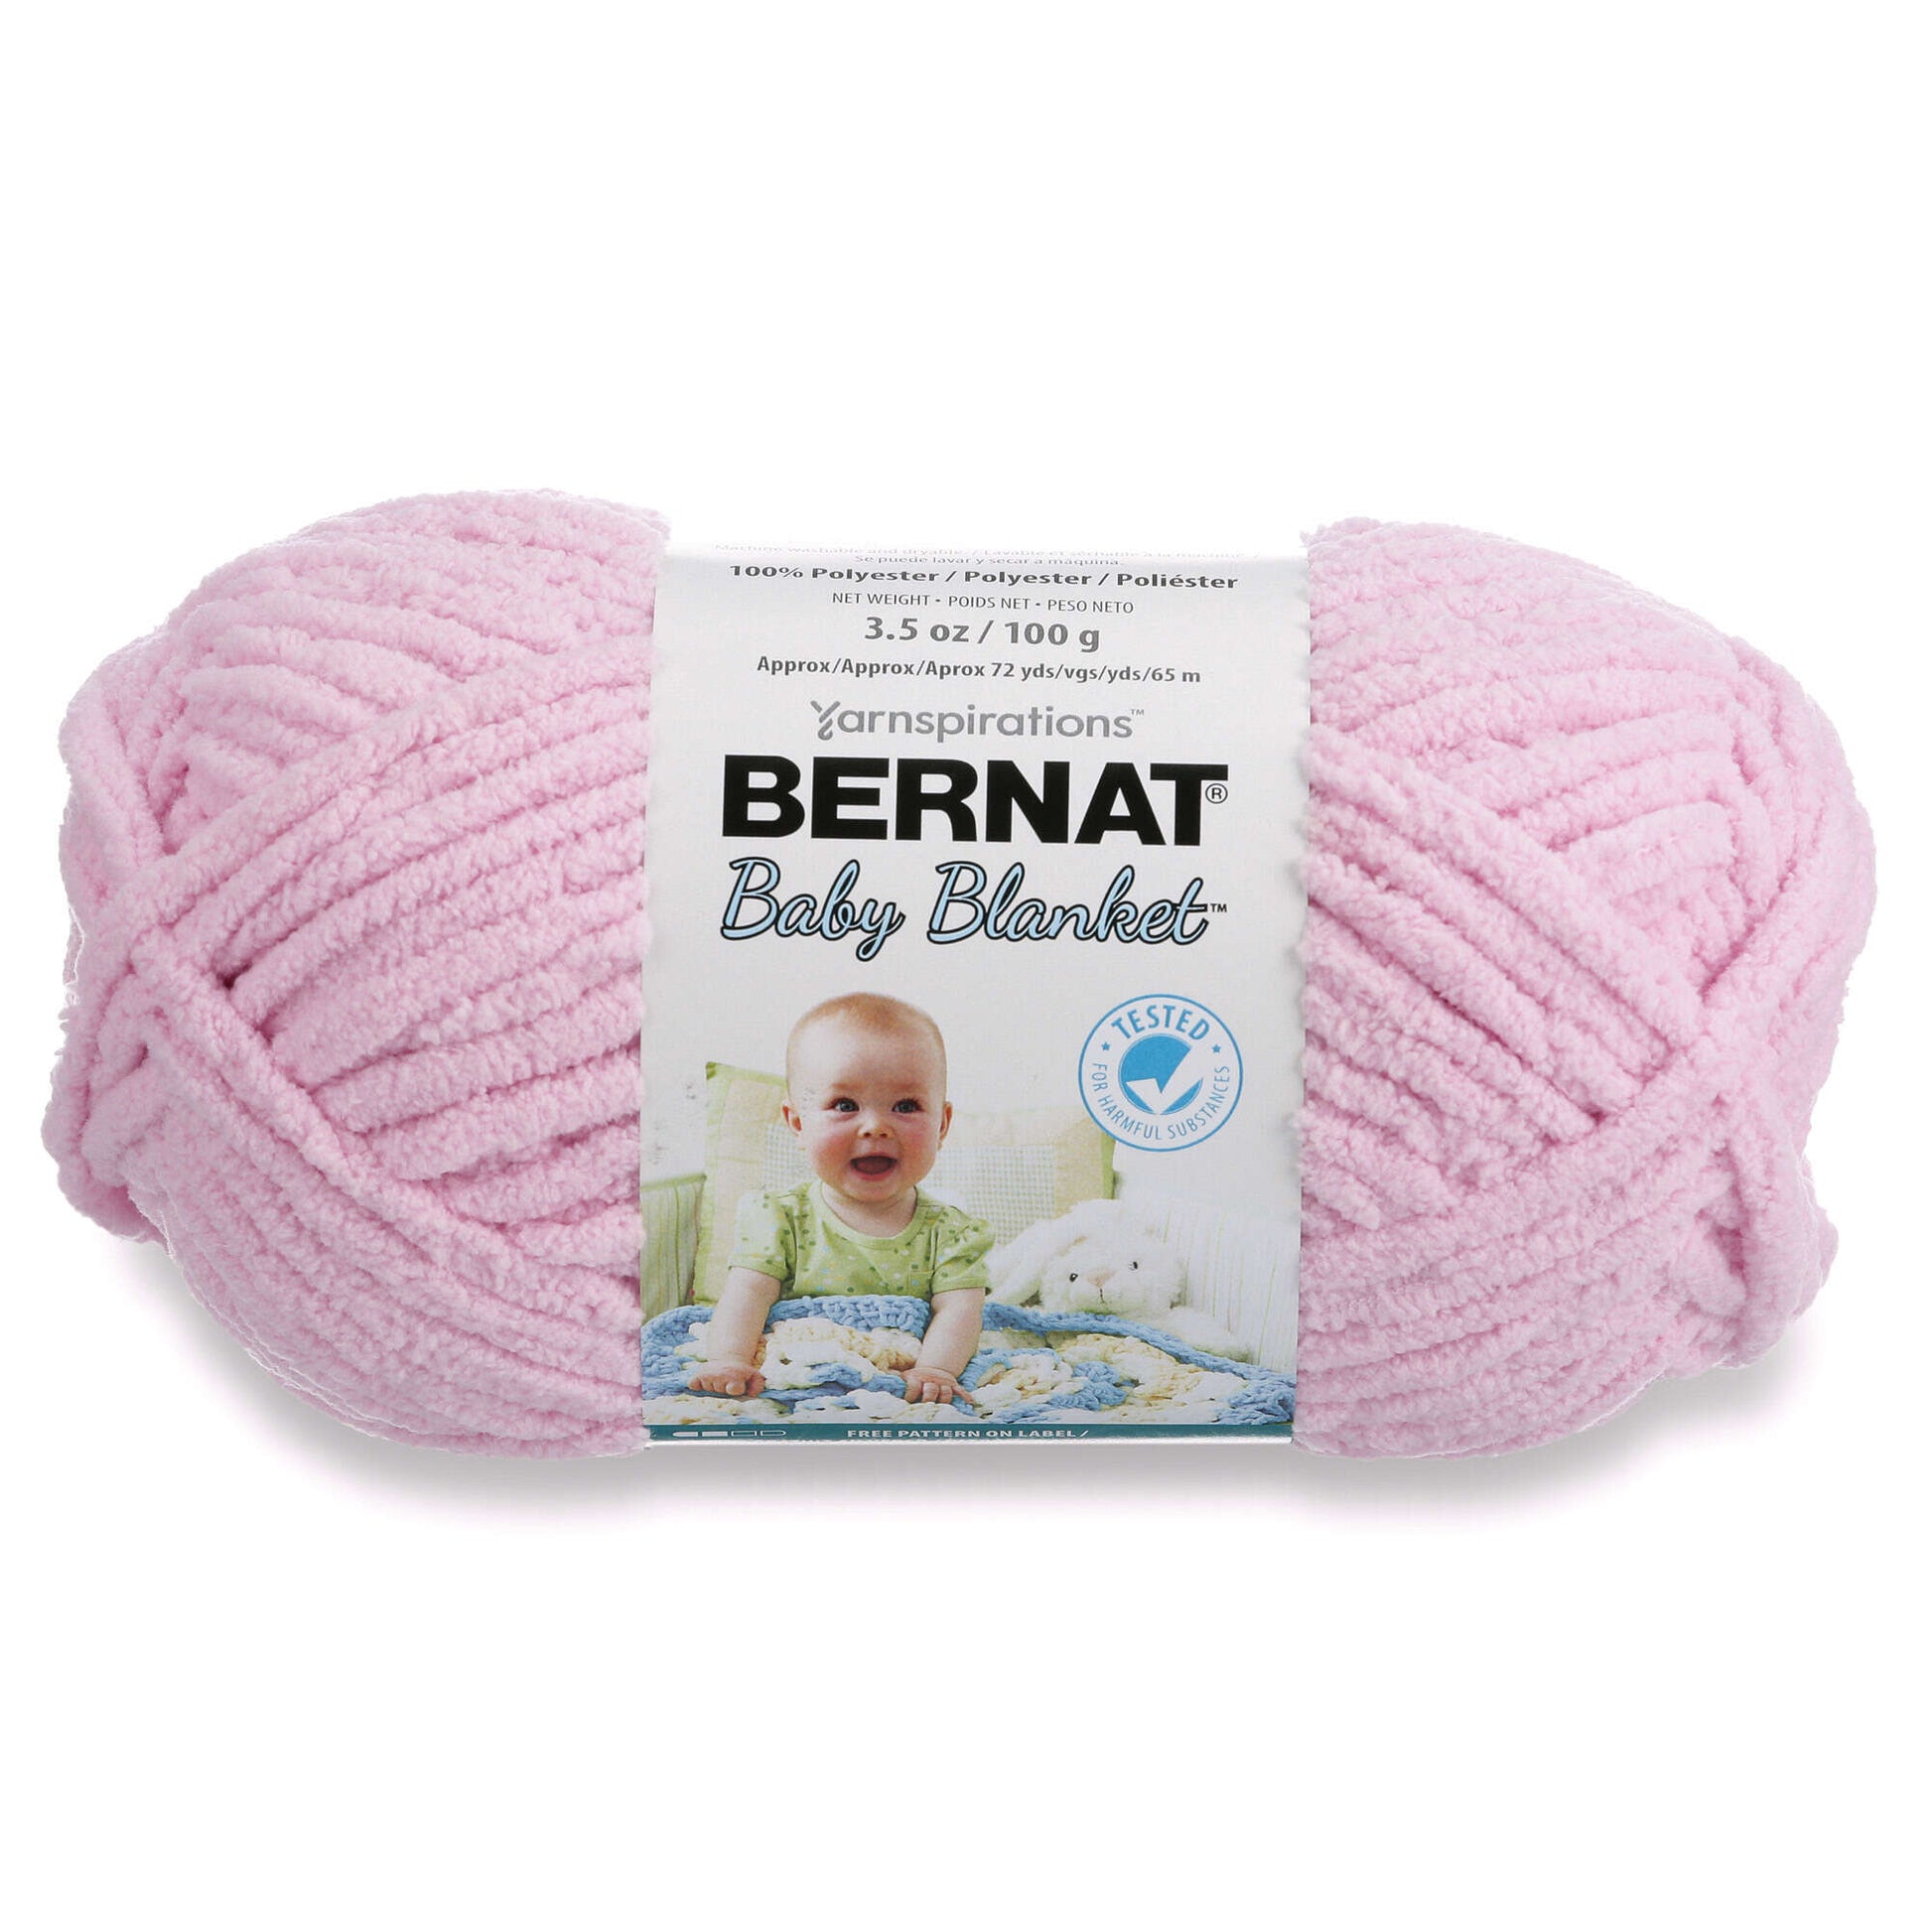 Bernat Baby Blanket Yarn - Discontinued shades